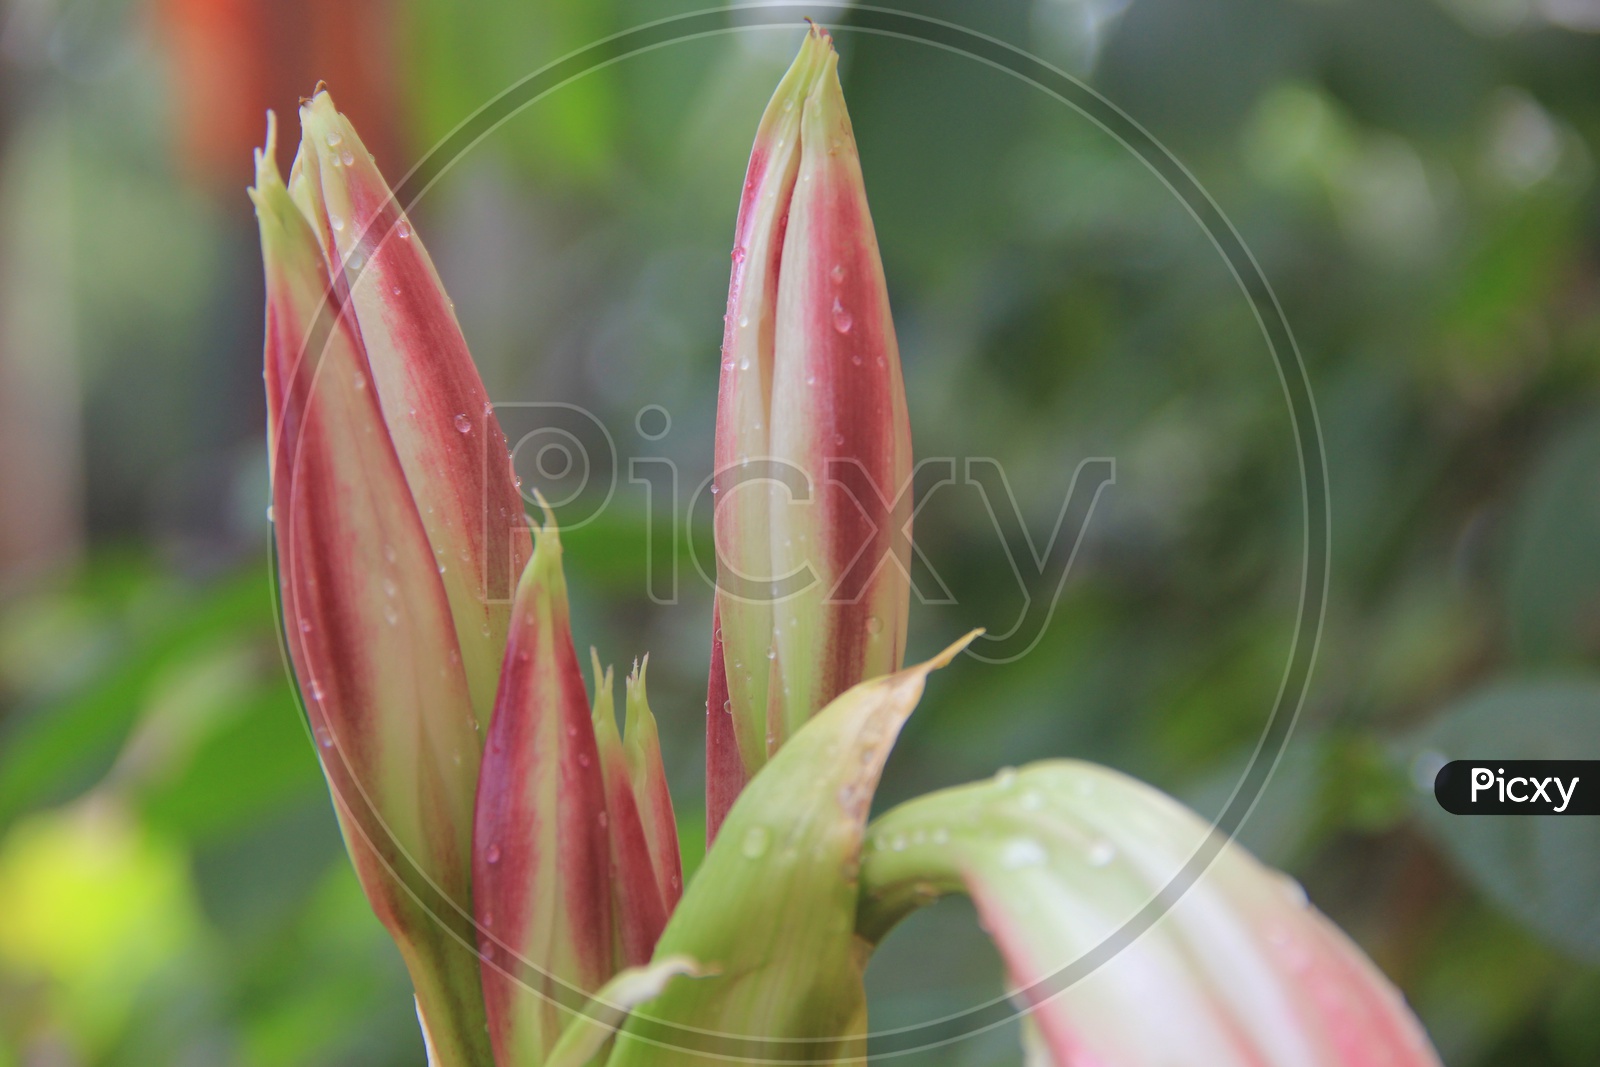 Ginger Flower Buds Closeup Shot with Green Bokeh Background / Flower Buds Coseup shots